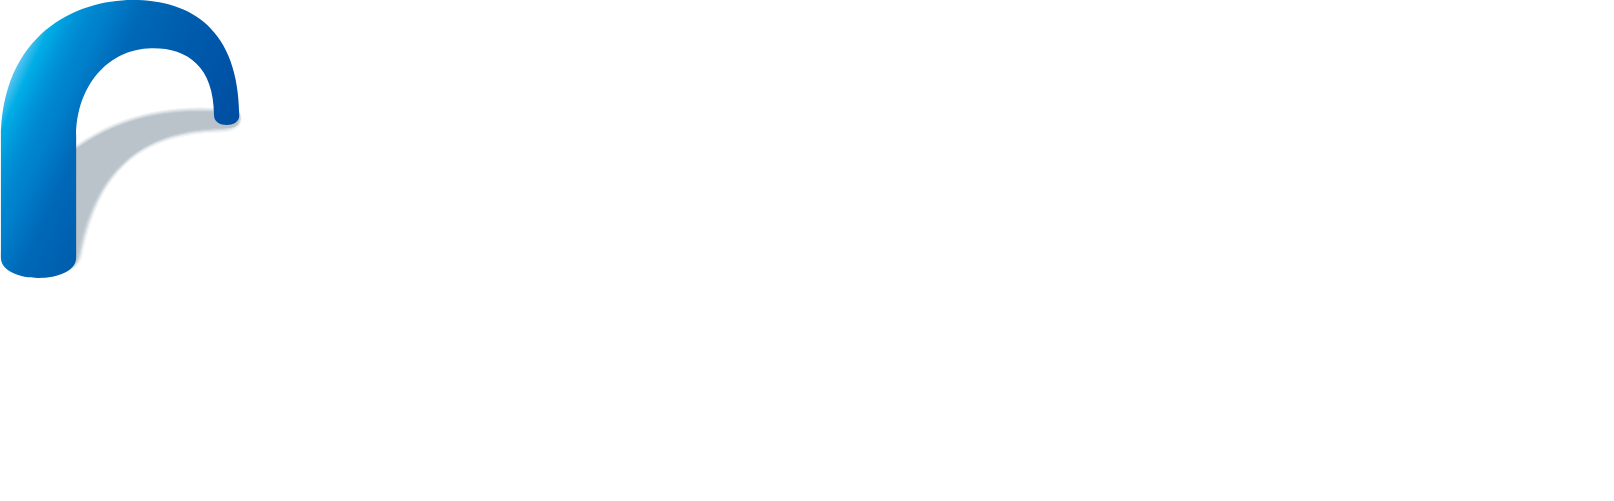 Recruit logo large for dark backgrounds (transparent PNG)